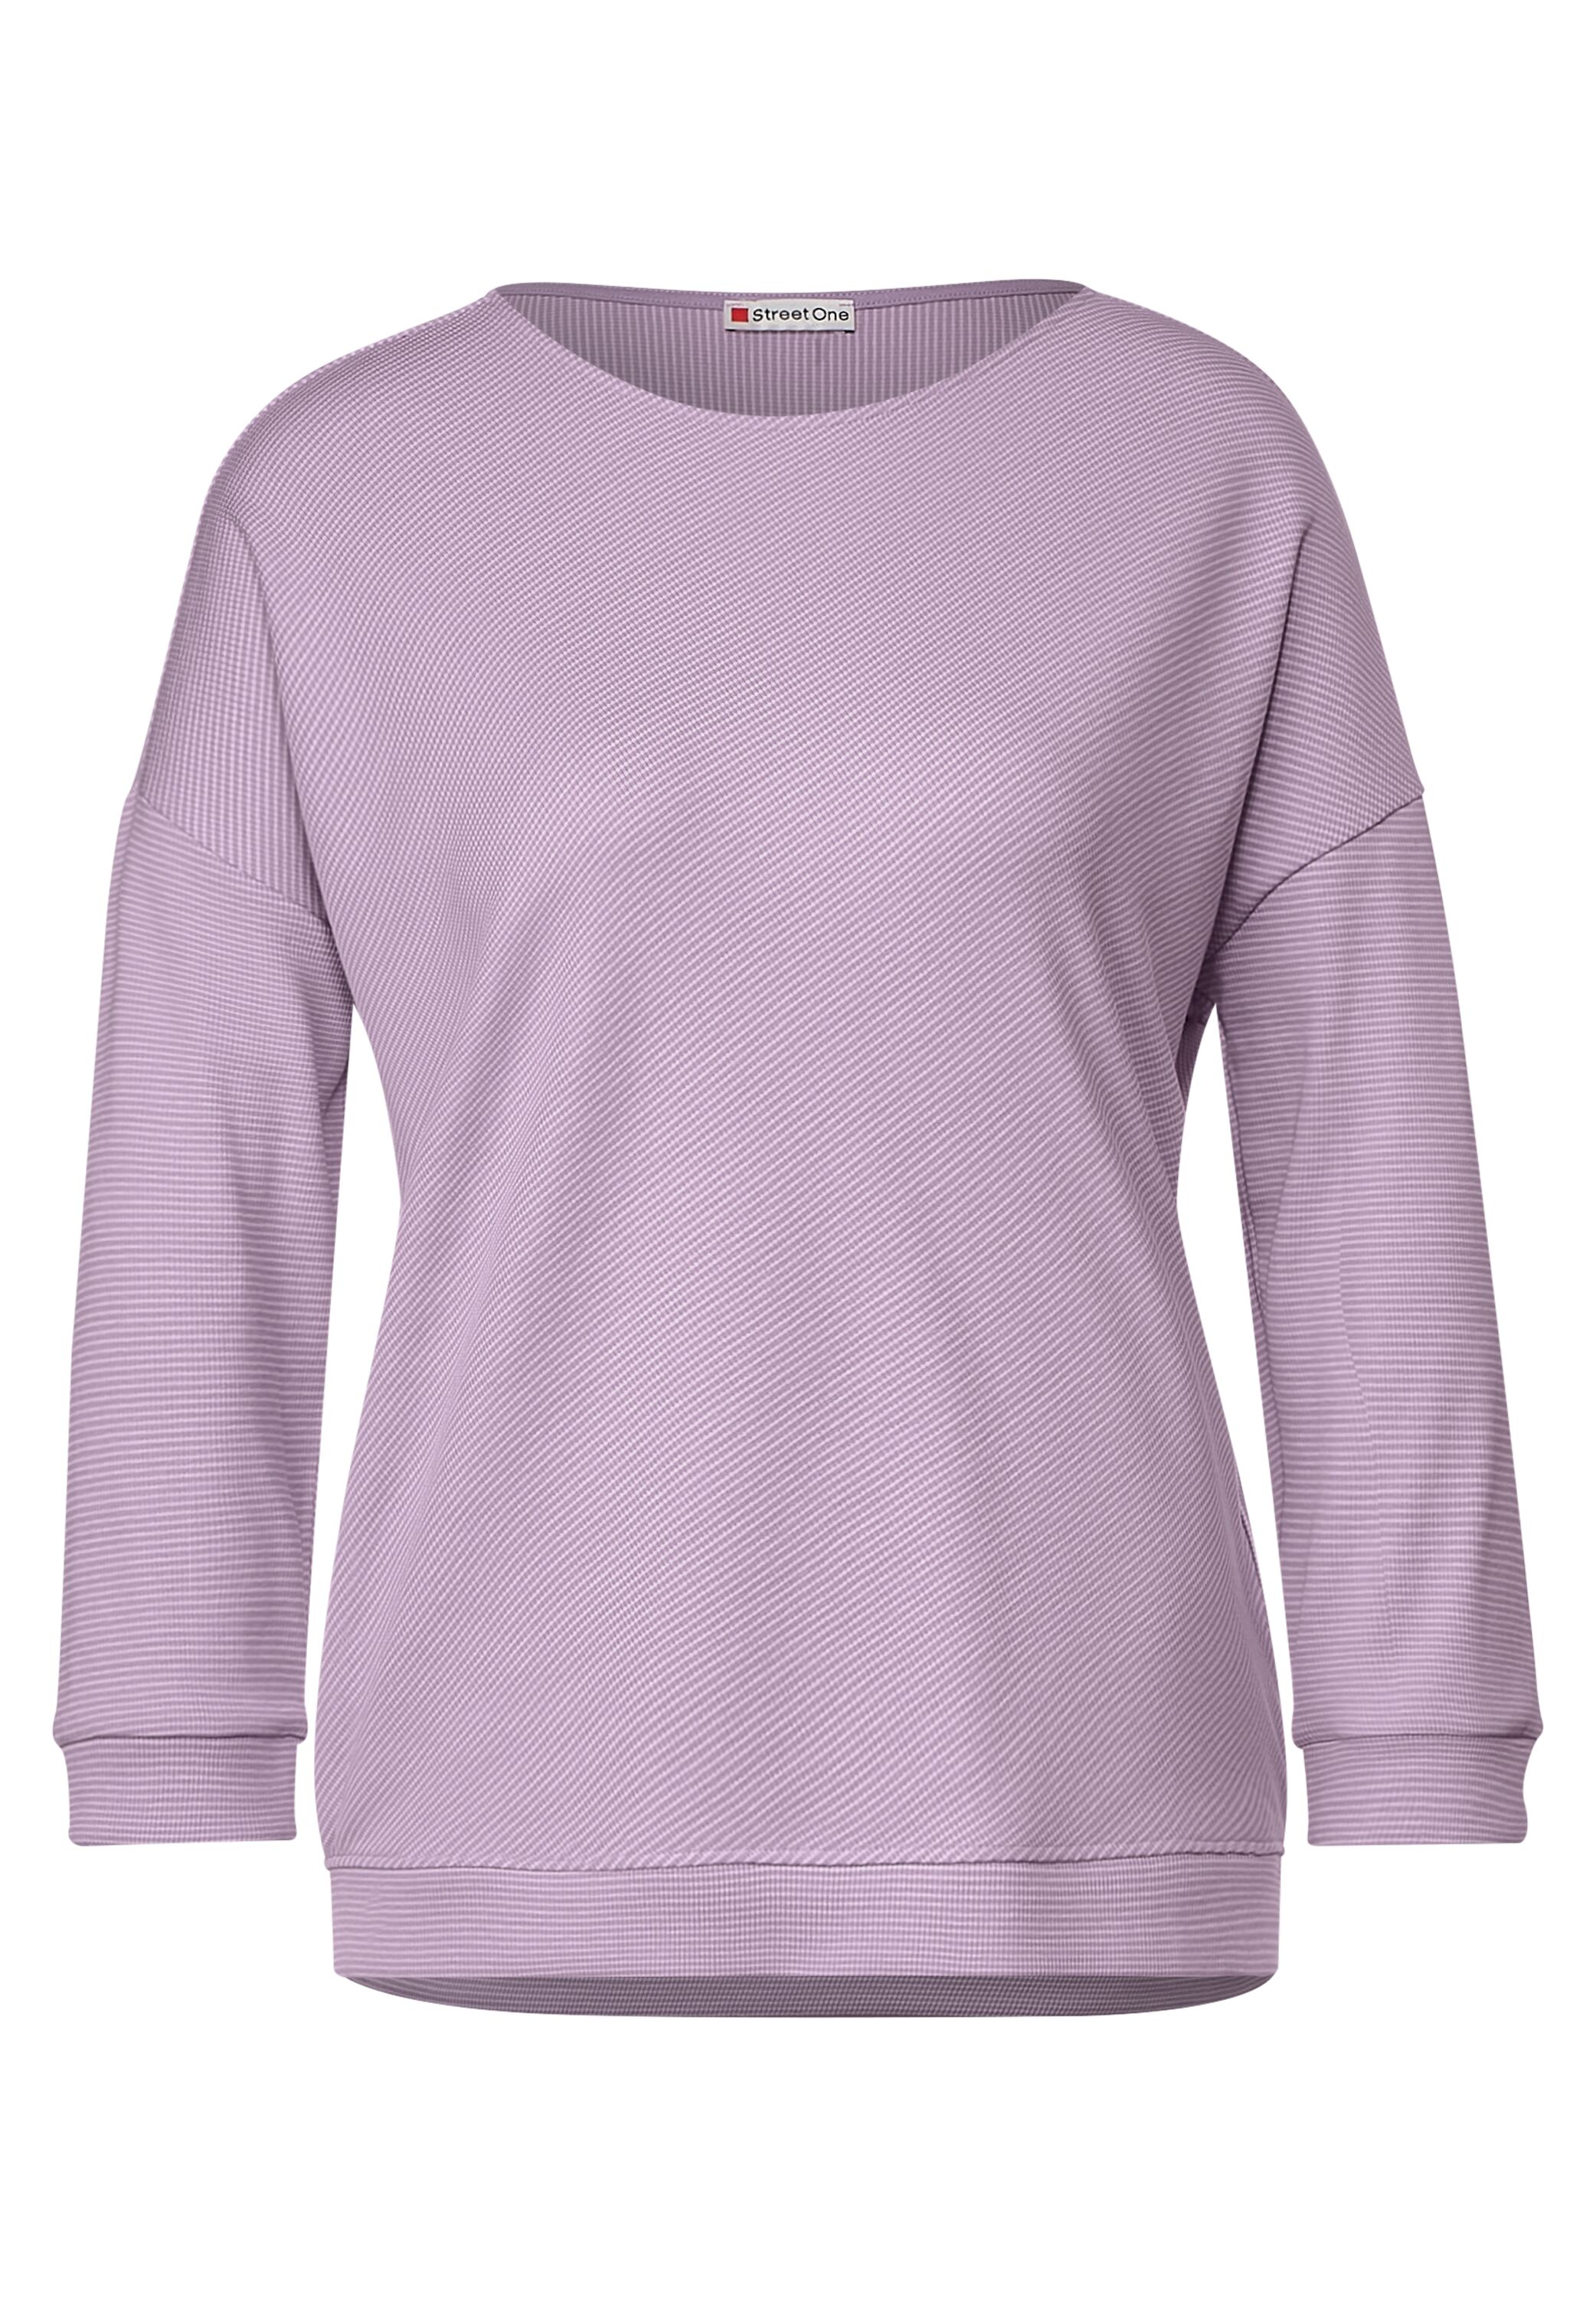 Street One Lilac Pure Soft CONCEPT Mode Streifenshirt in SALE A320427-25289 - im reduziert